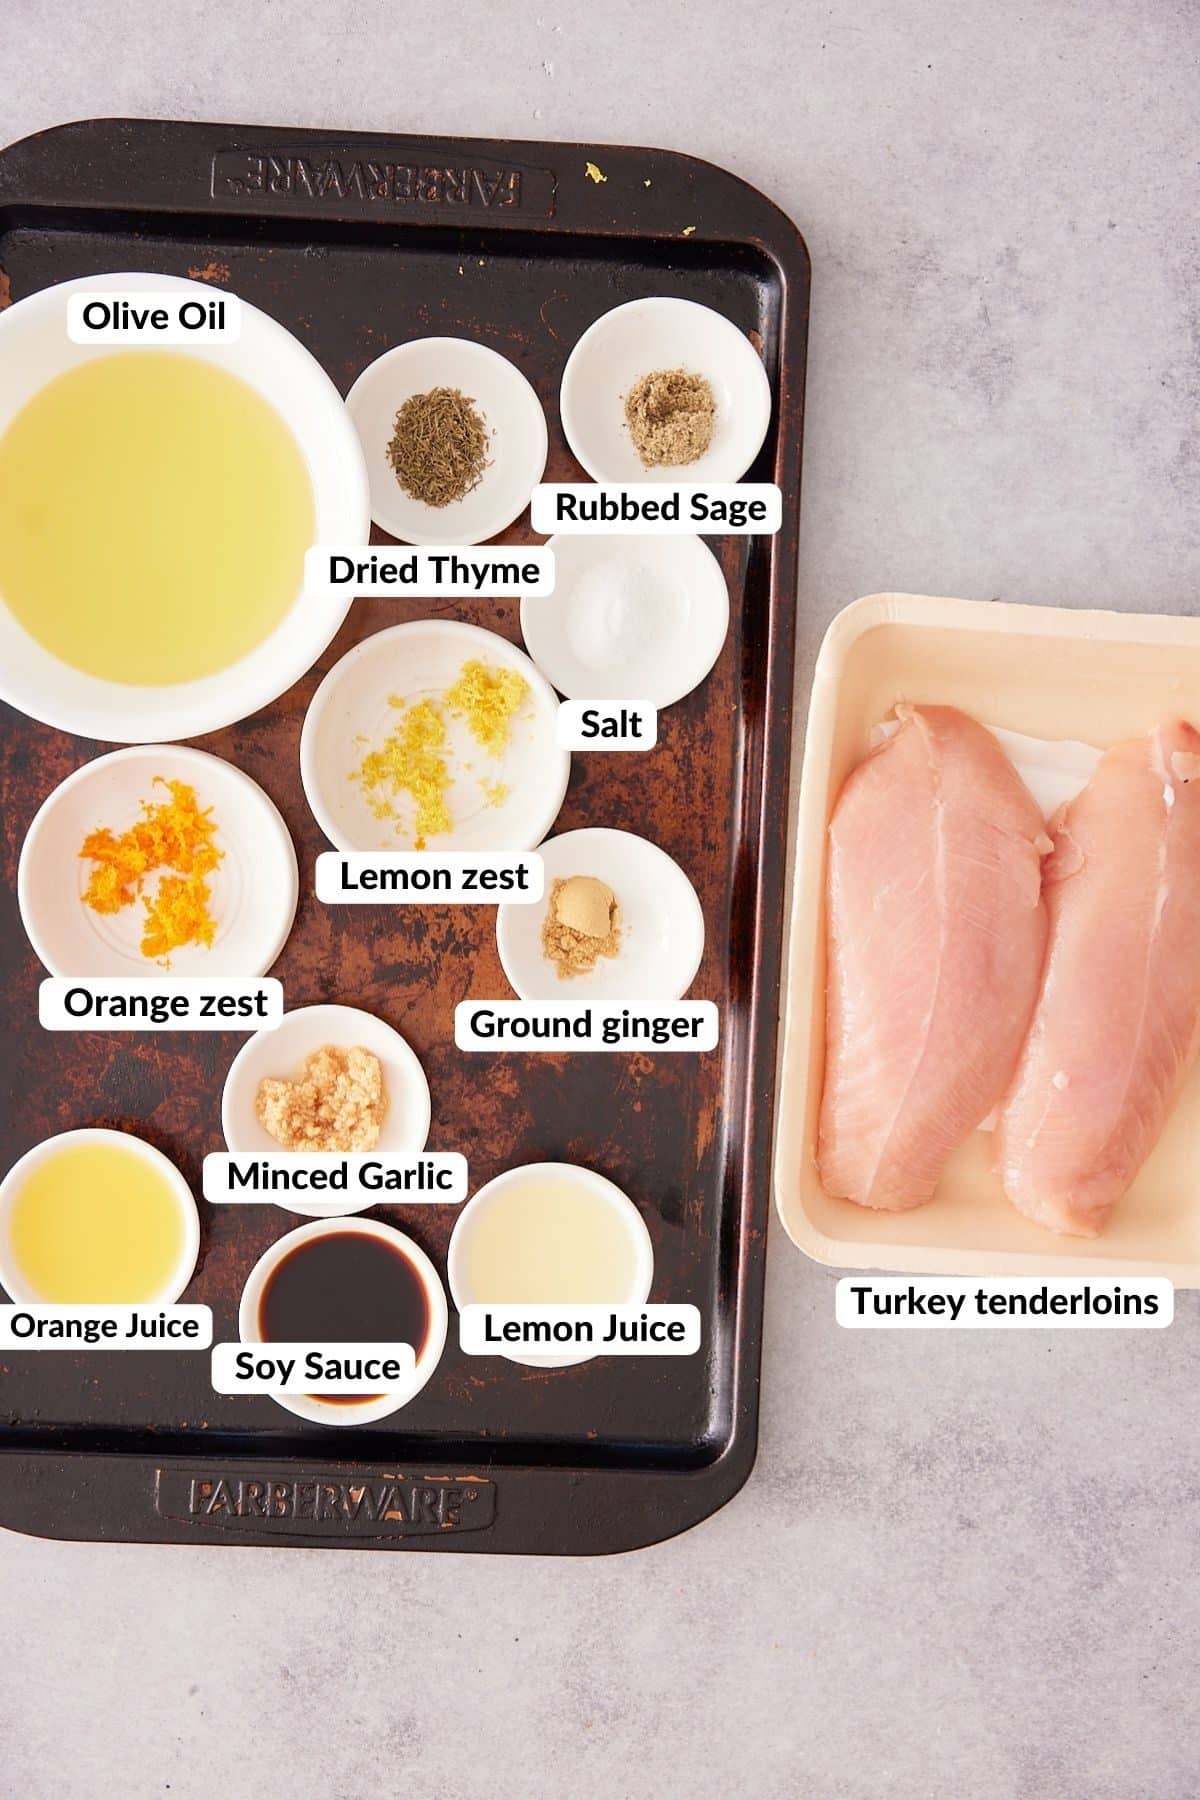 Turkey tenderloin ingredients set into individual white bowls